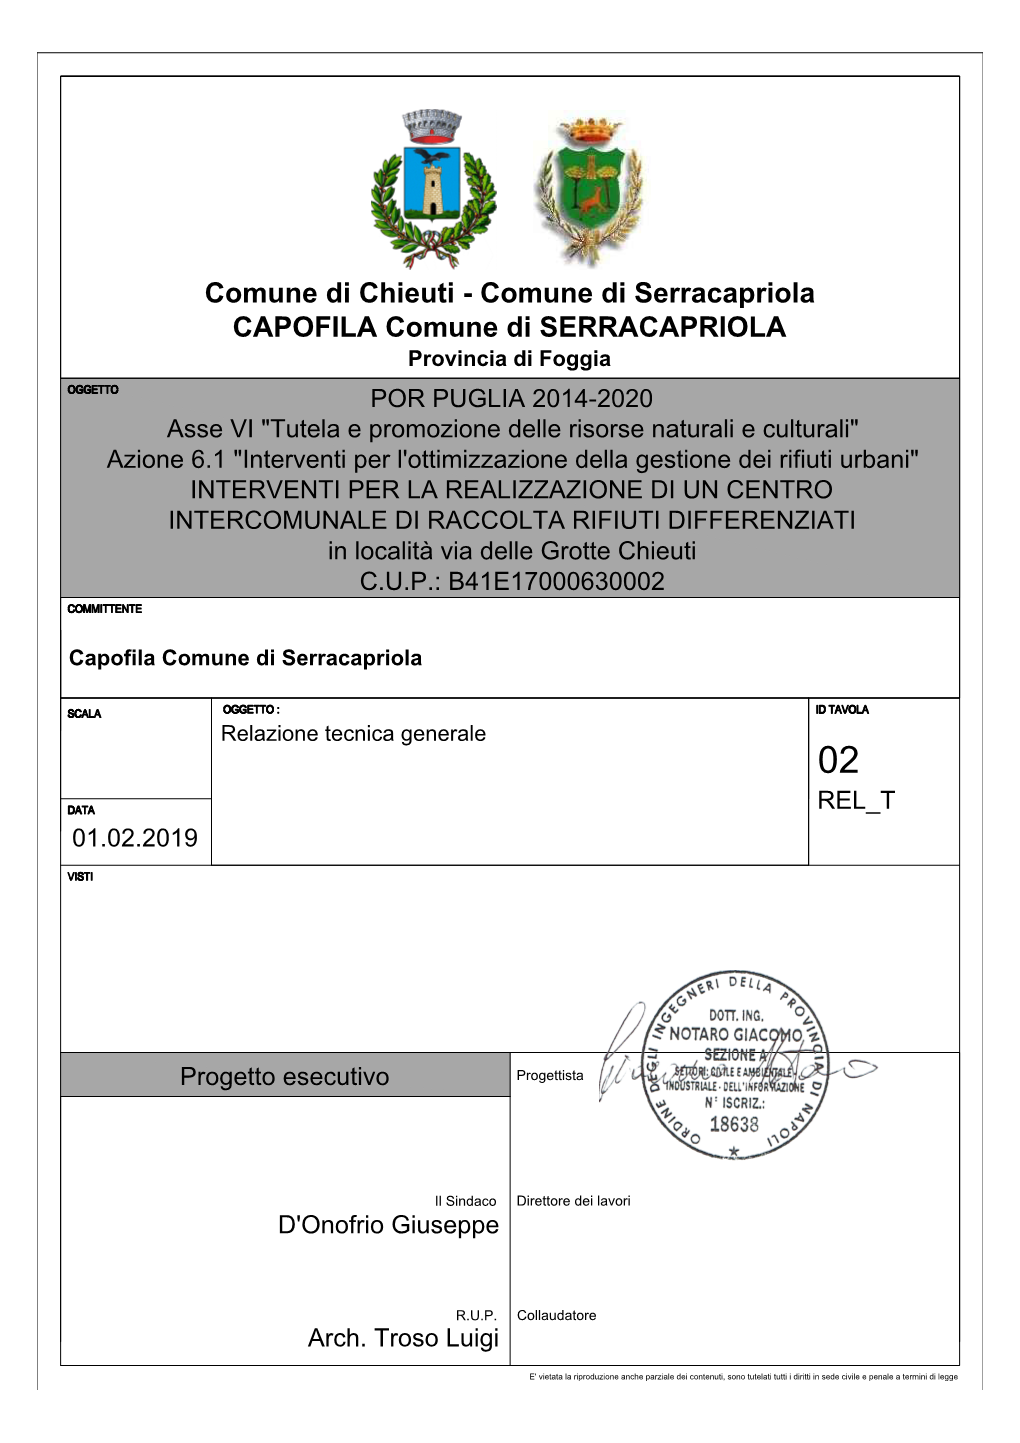 CRC Chieuti – Serracapriola 02-REL T